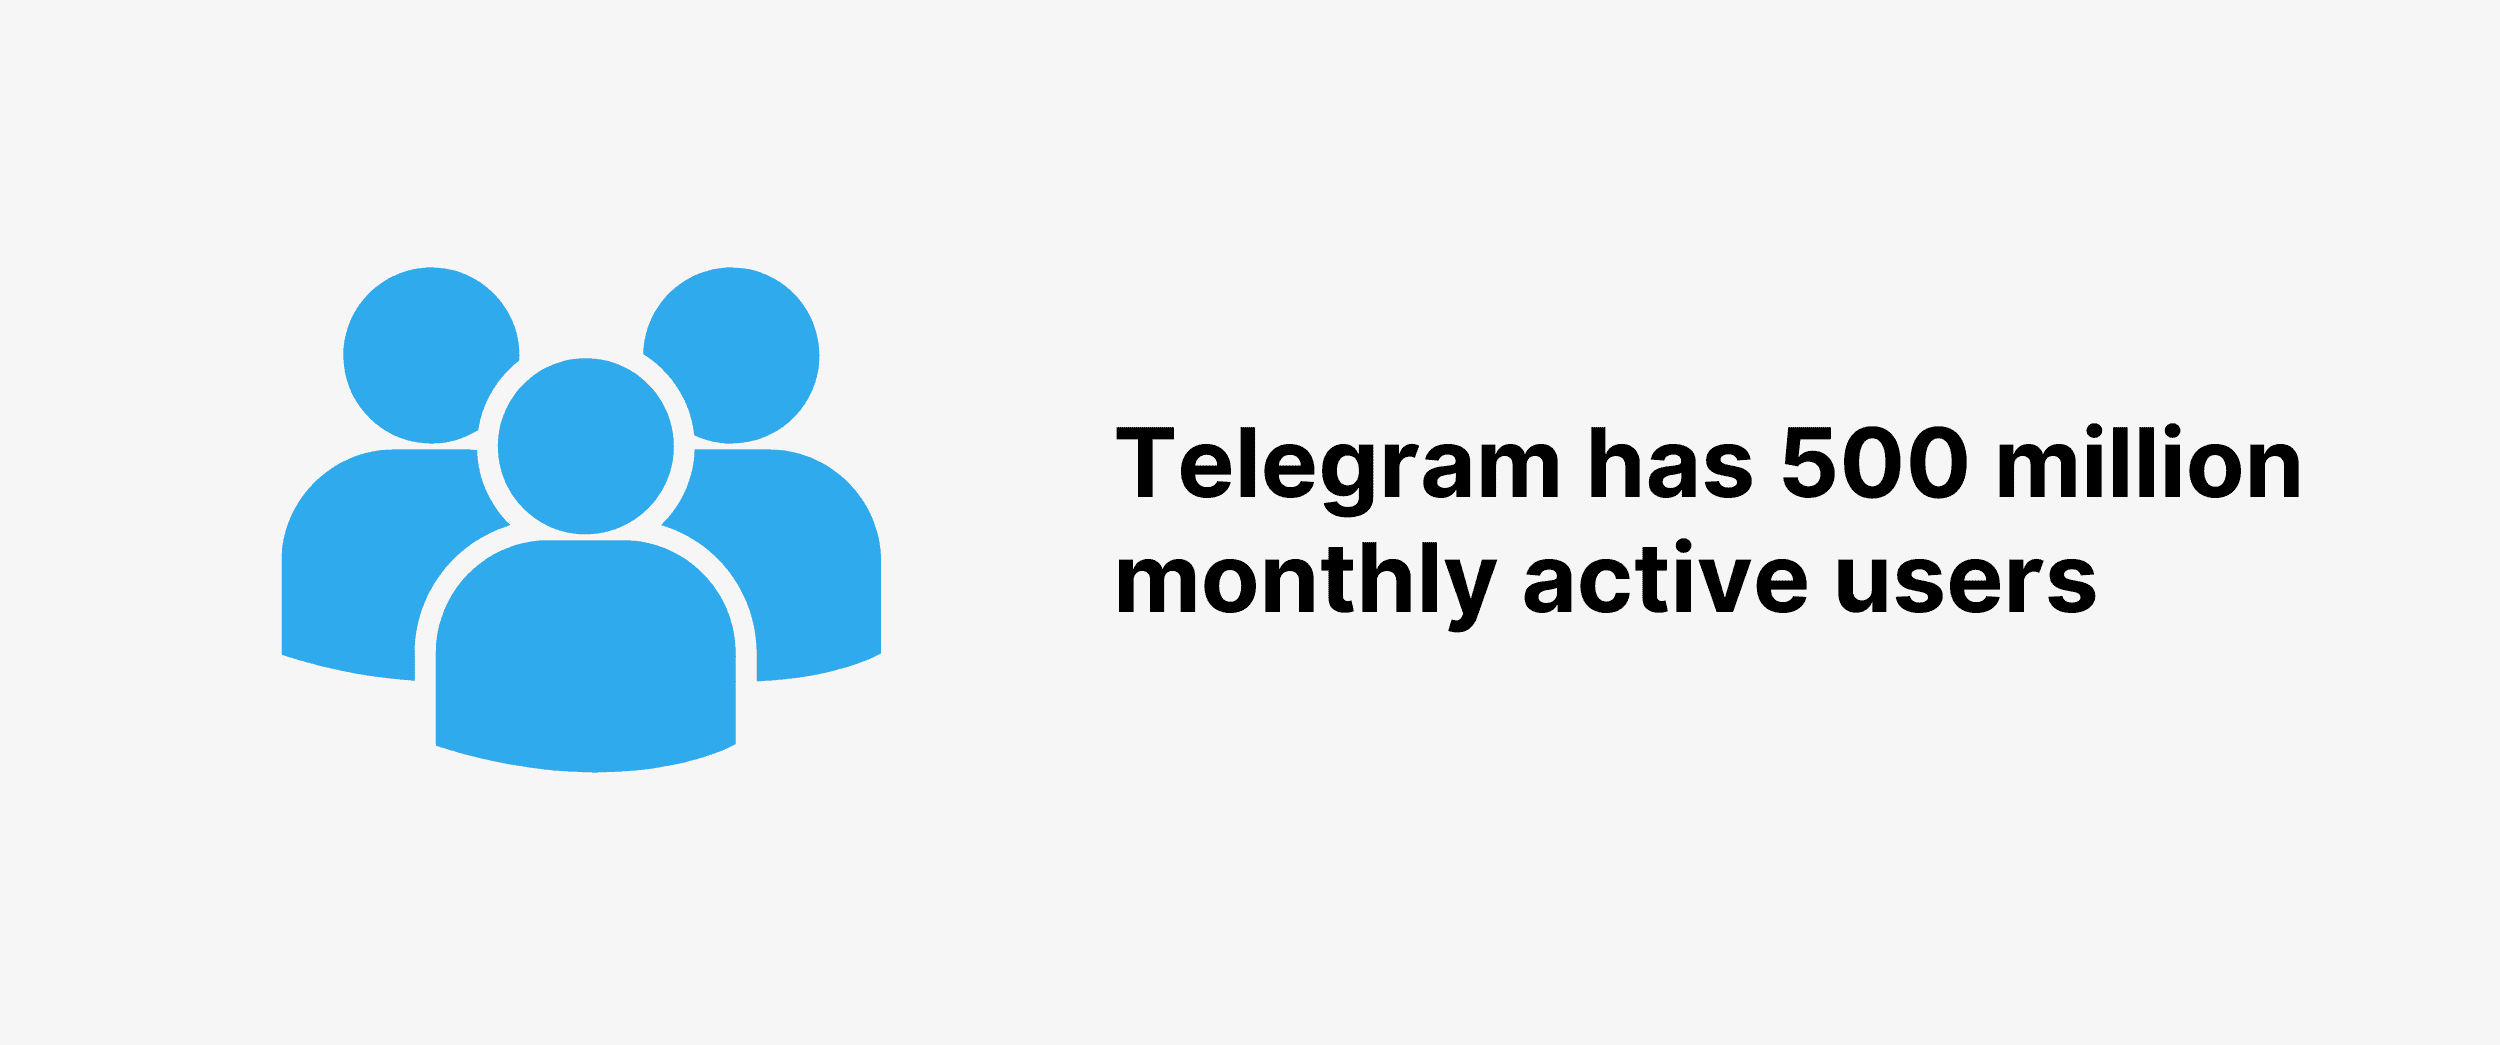 Telegram has 500 million monthly active users